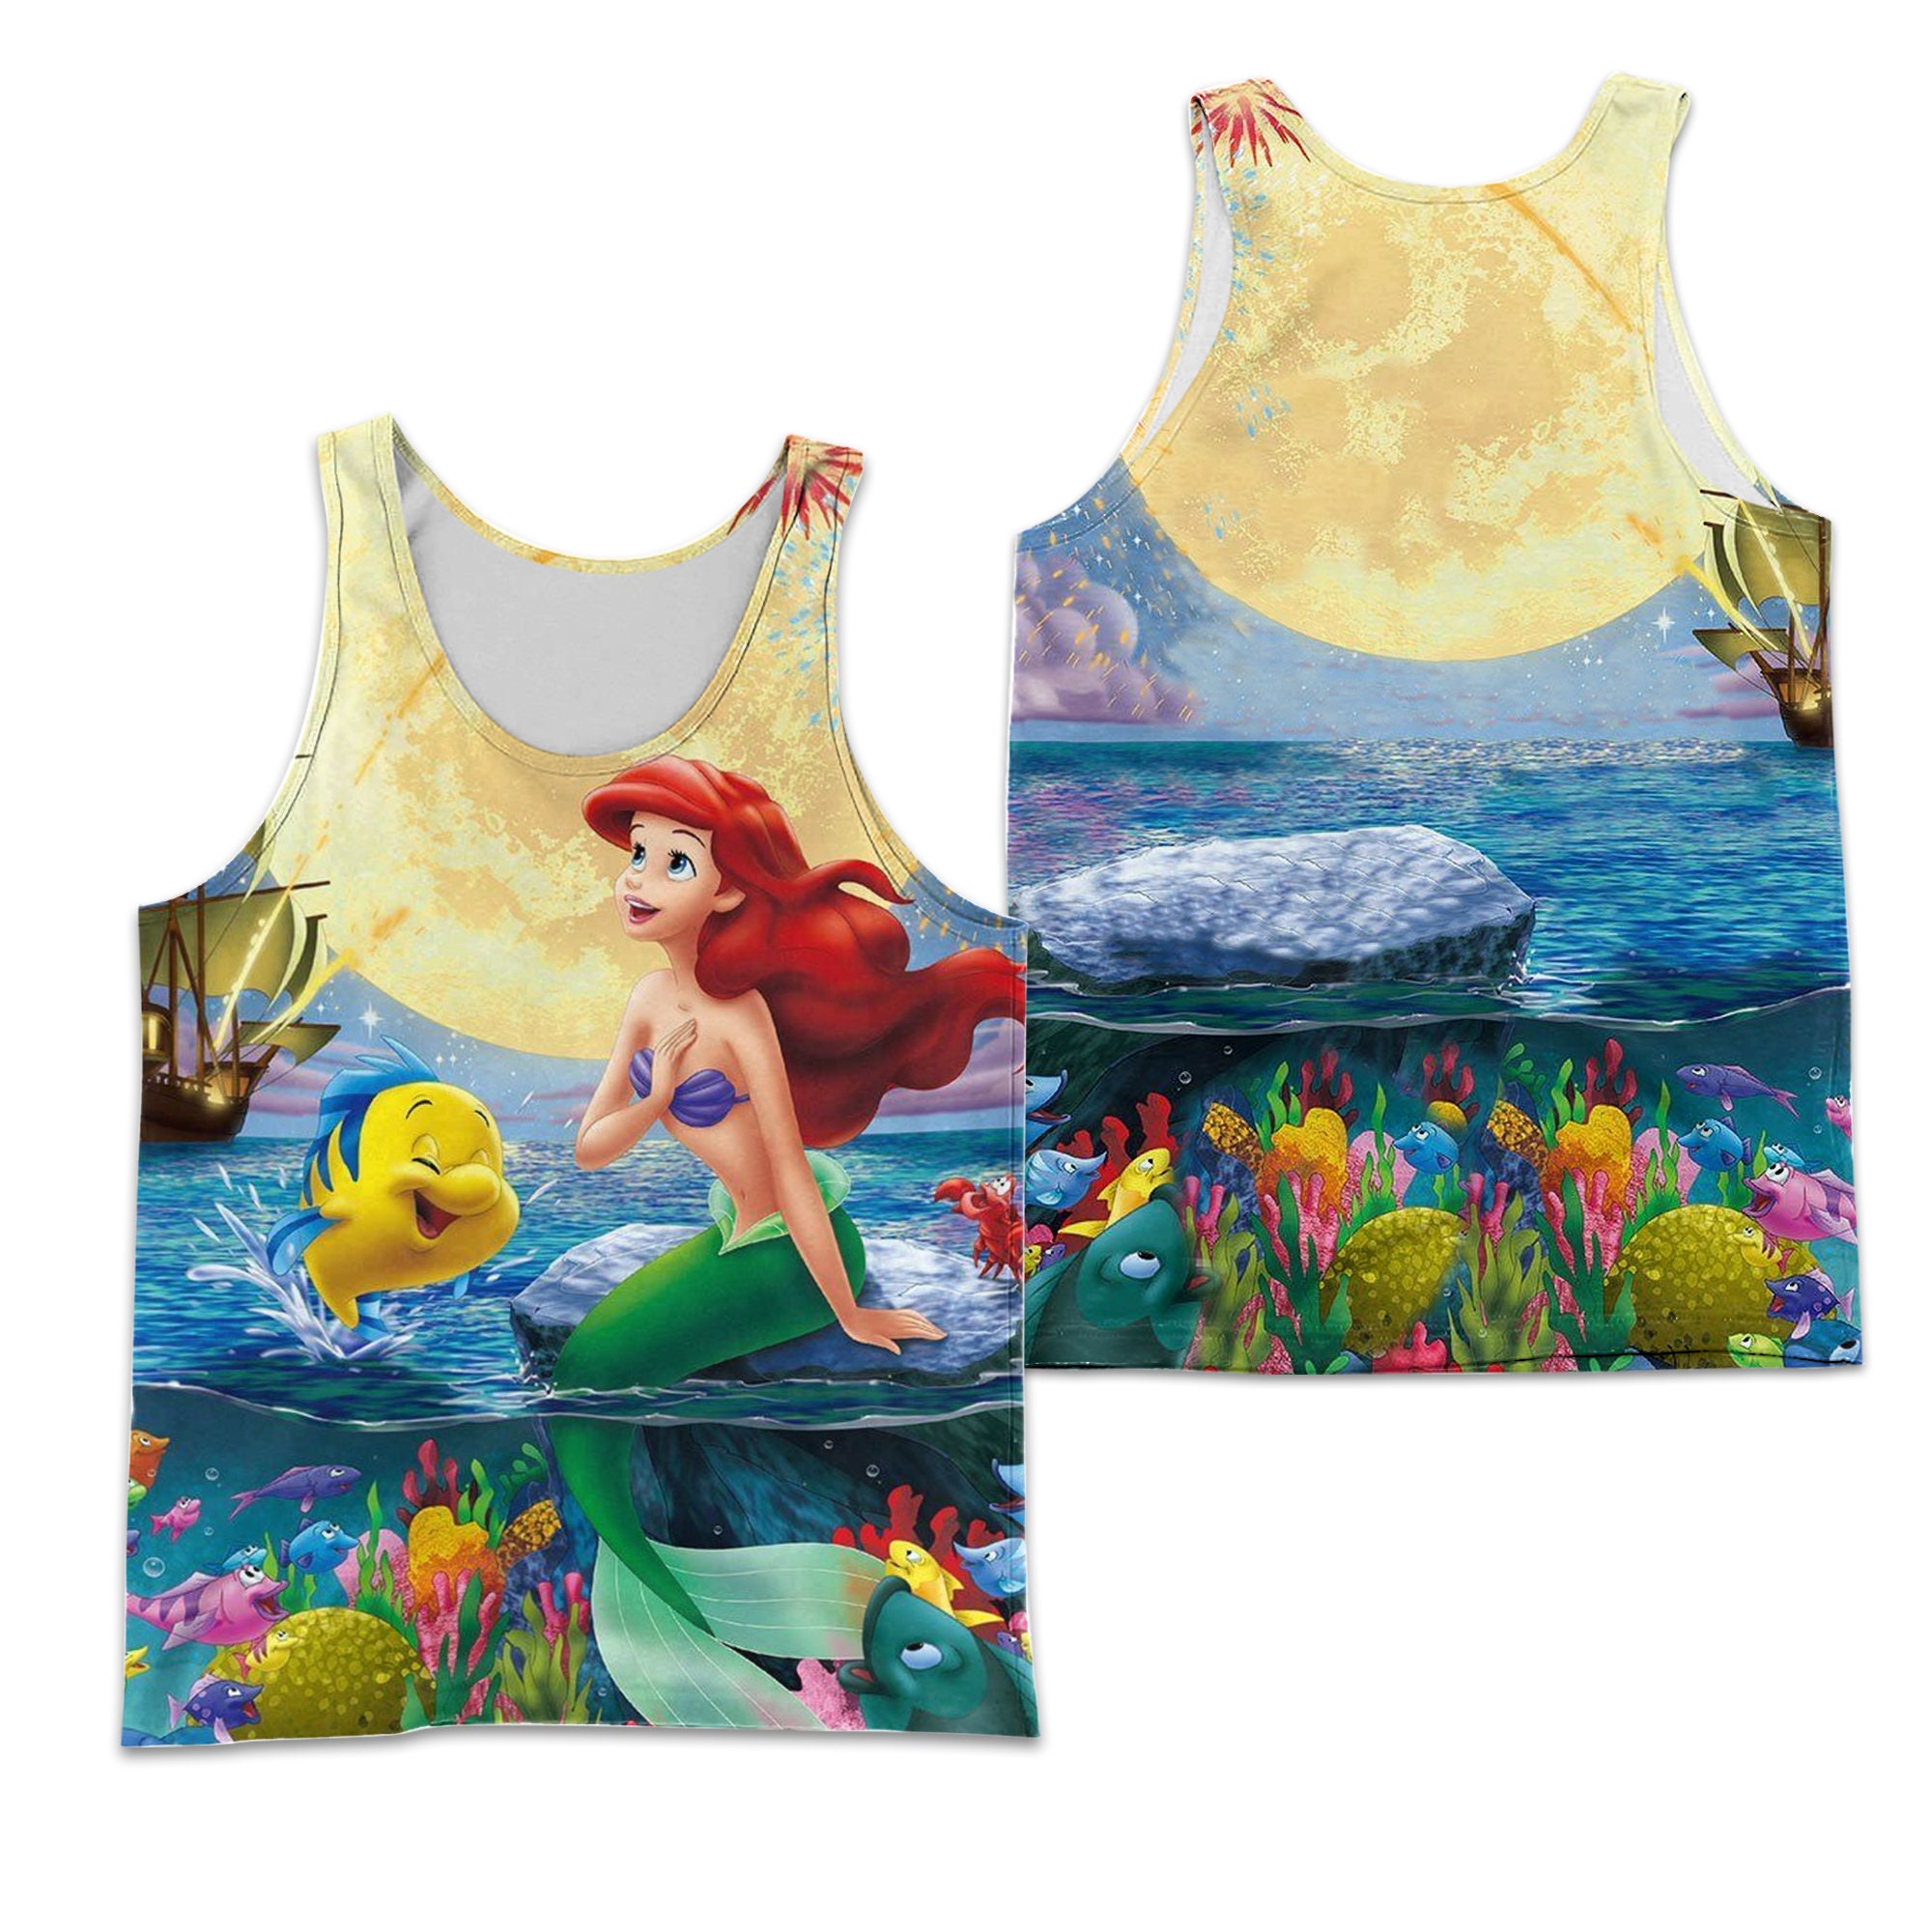 Colorful Ariel Princess Full Print Disney Cartoon Graphic Summer Vacation 3D Tank Top